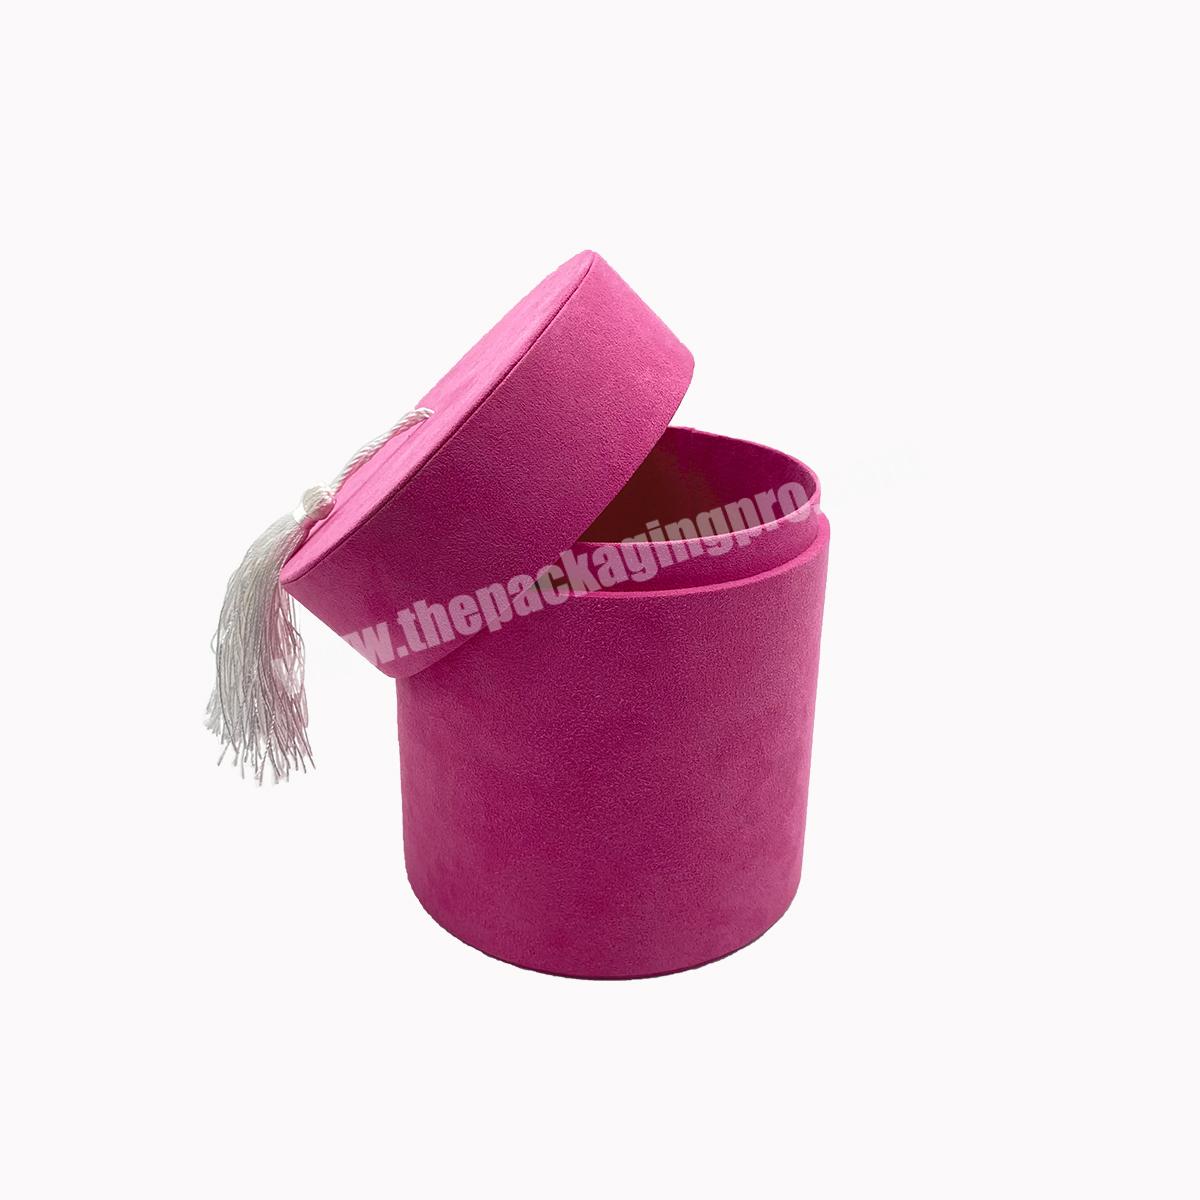 Wholesale Large Size Gift Storage Box Velvet Cosmetic Round Box with Tassels